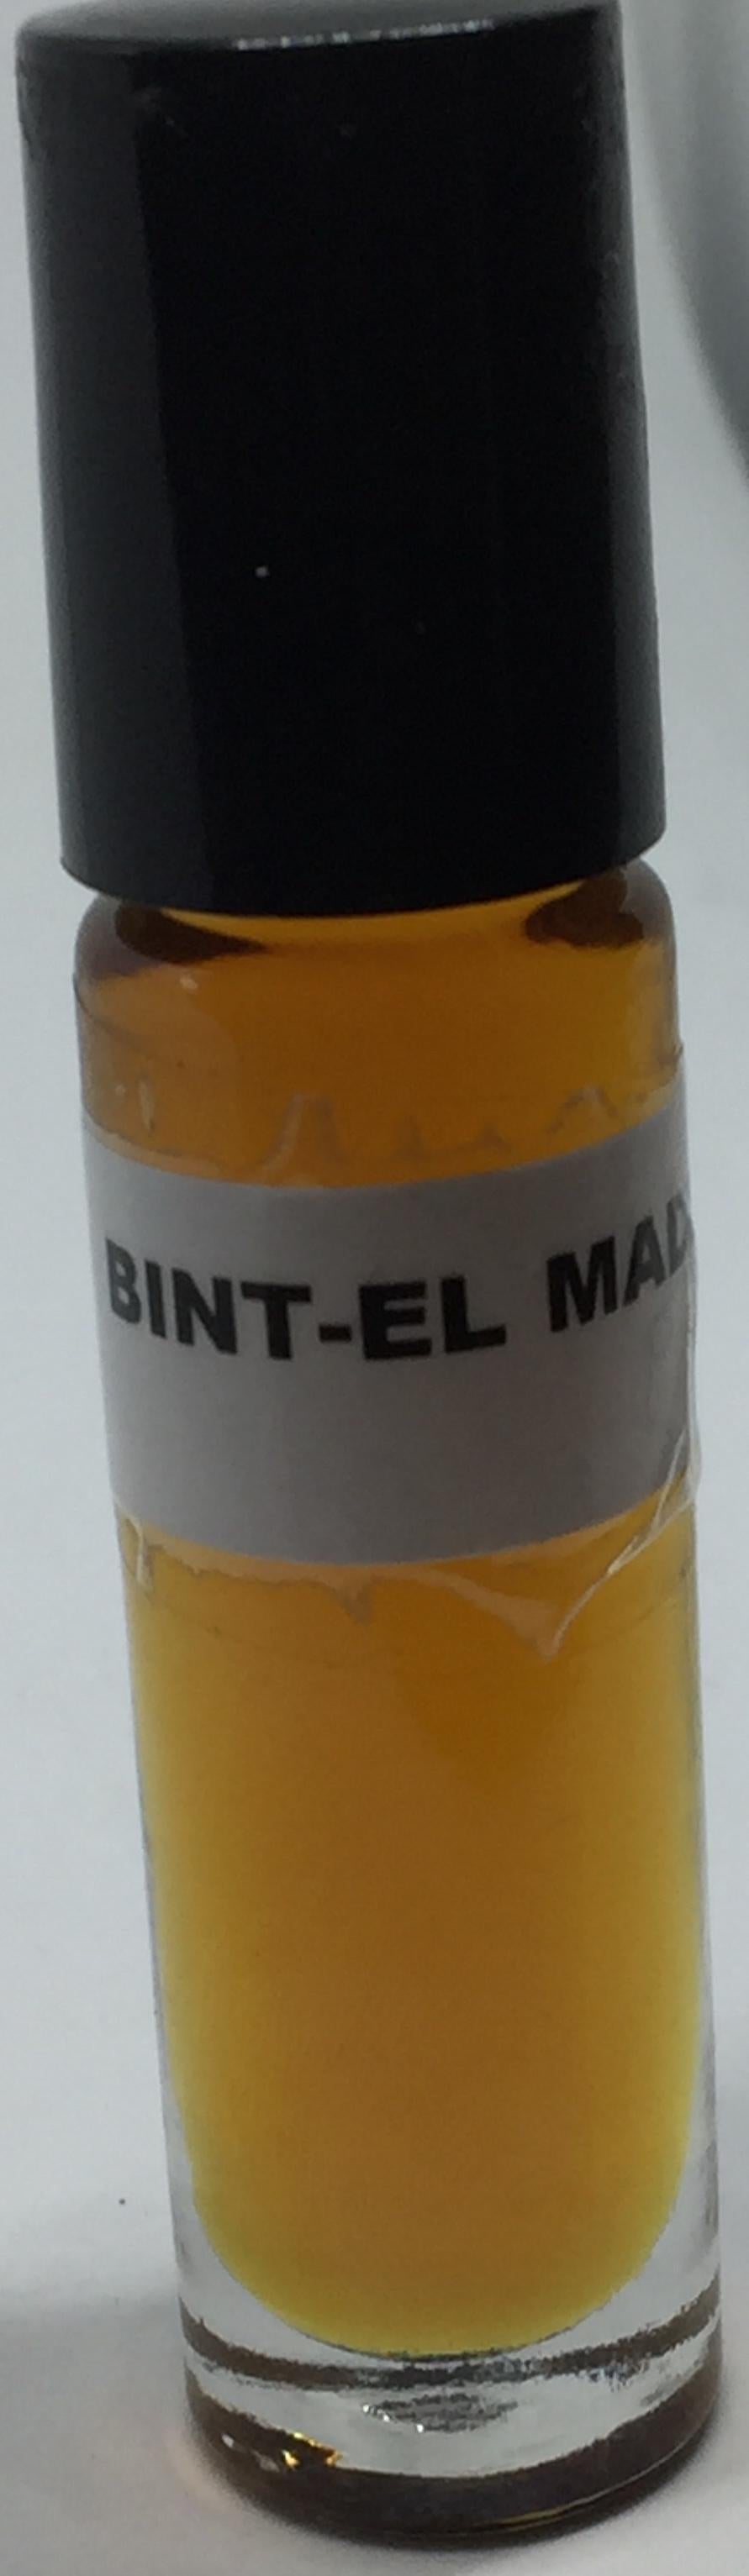 Bint-El Madina: Fragrance(Perfume)Body Oil Unisex